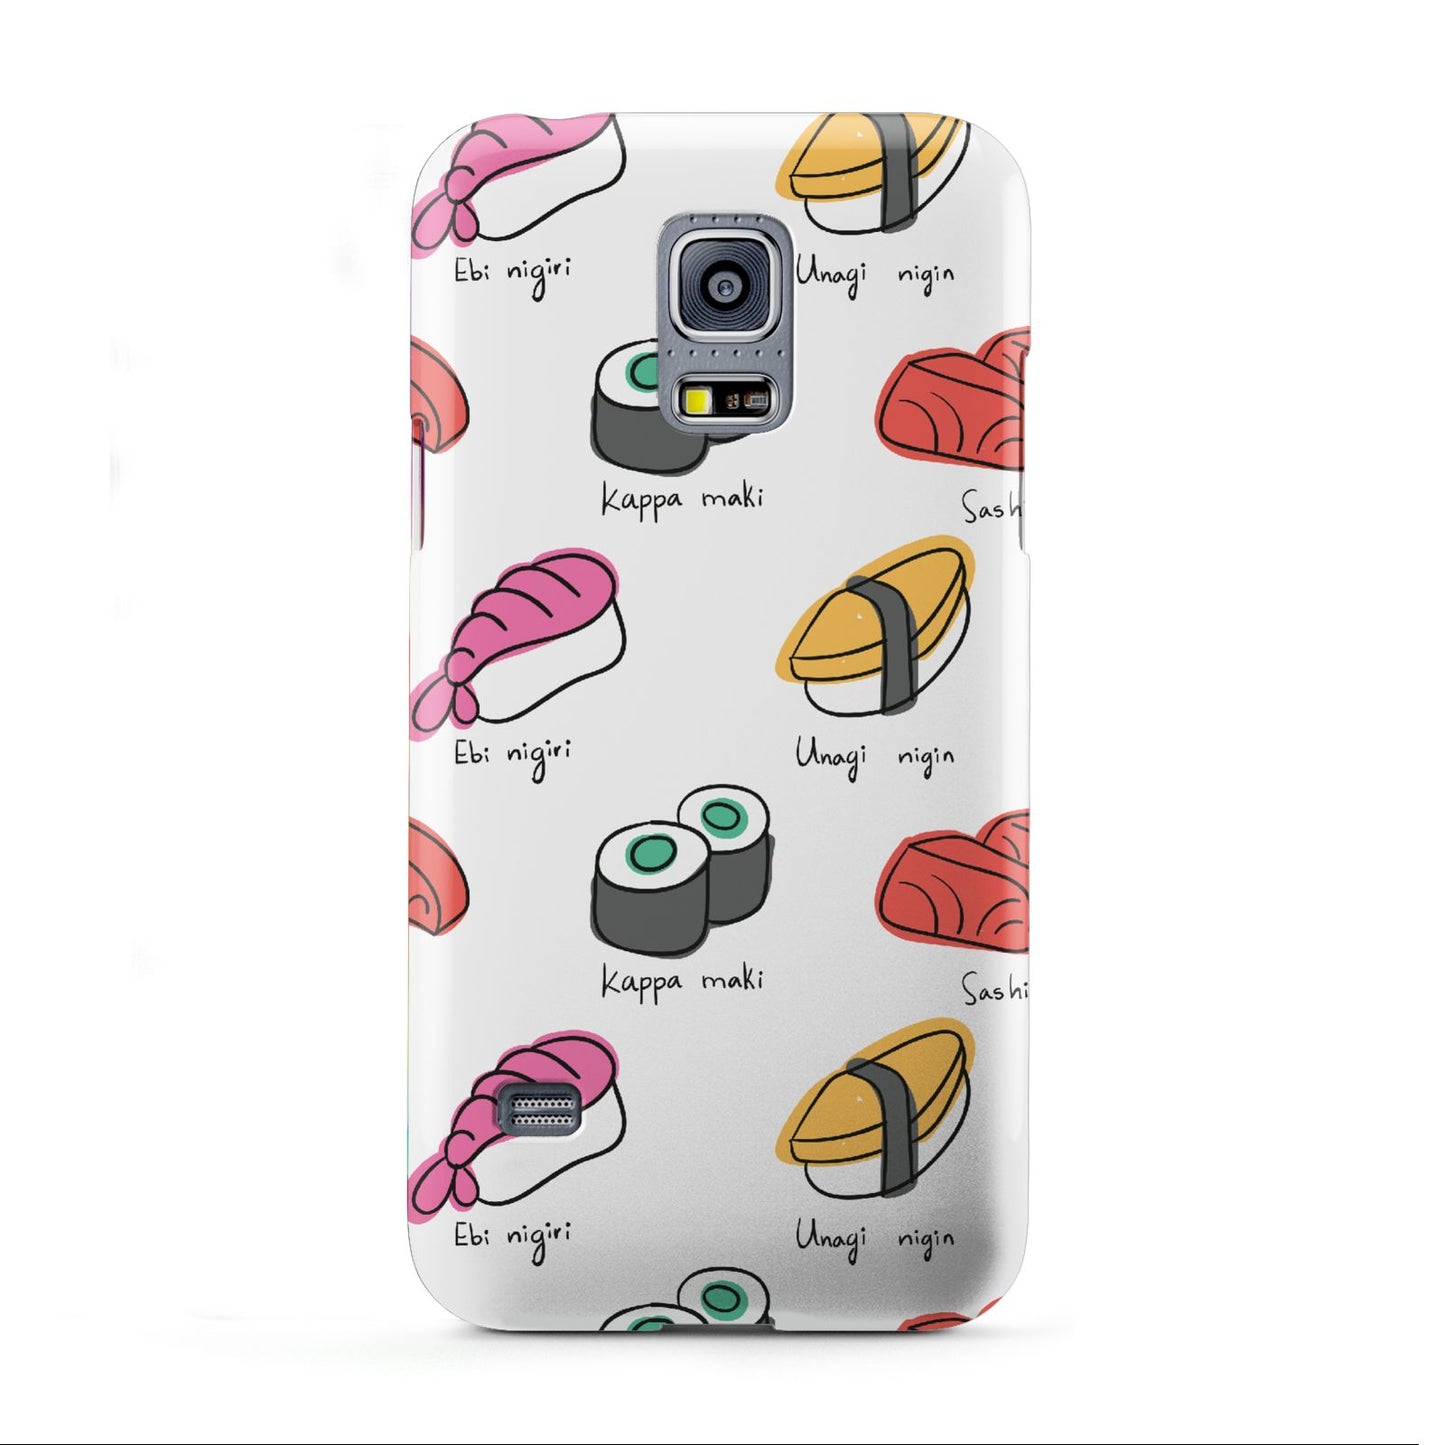 Sashimi Kappa Maki Sushi Samsung Galaxy S5 Mini Case